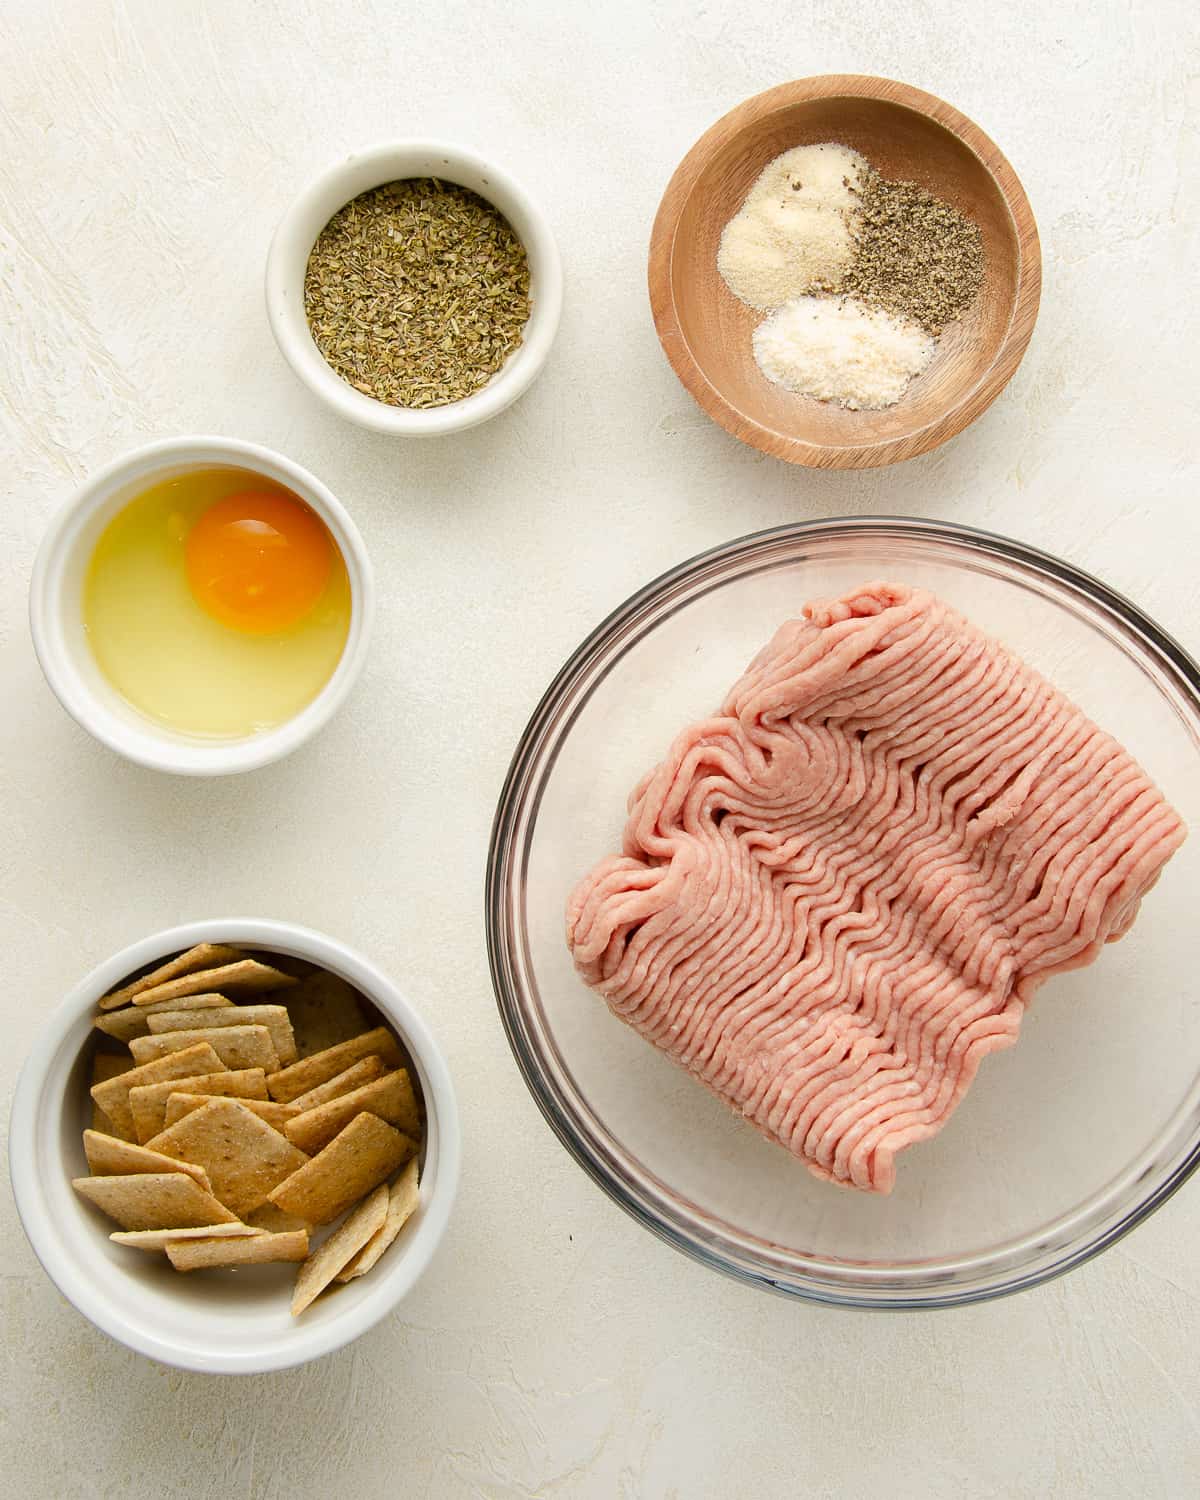 Ingredients needed to make gluten free meatballs: ground turkey, egg, gluten free crackers, and seasonings.